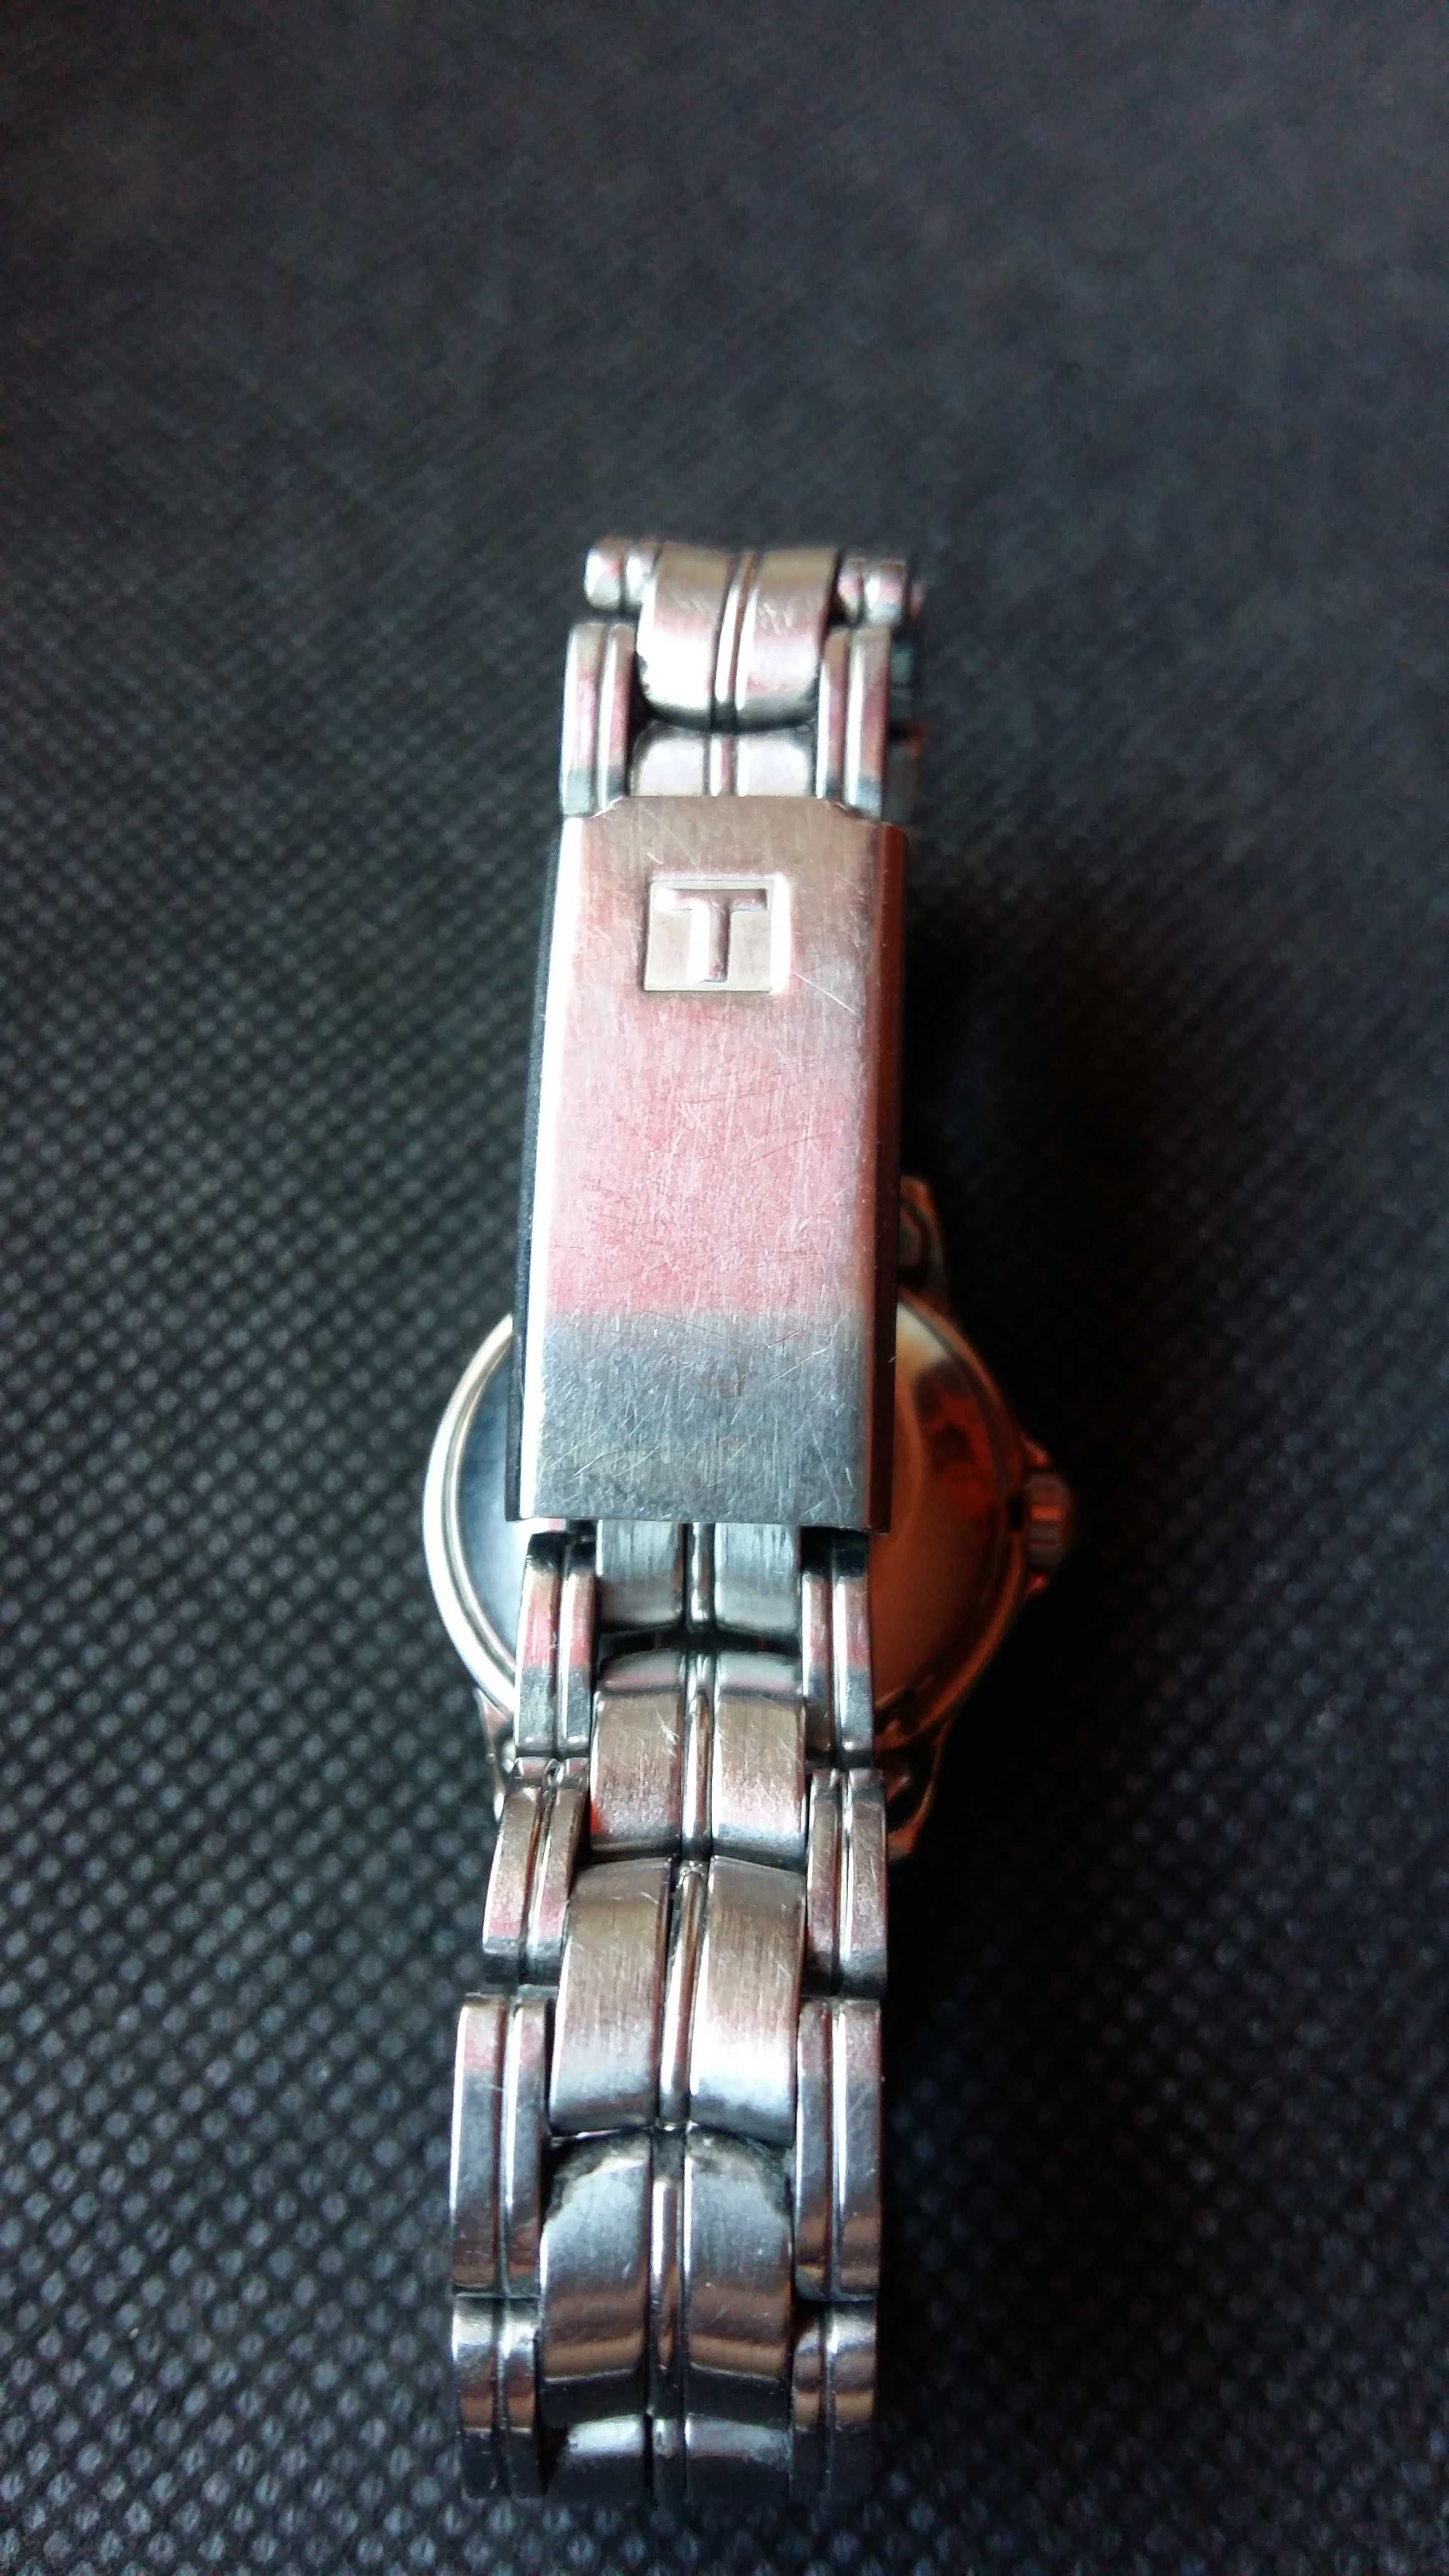 Zegarek Tissot Automatic 25 jewels ładny stan stal nie srebro.